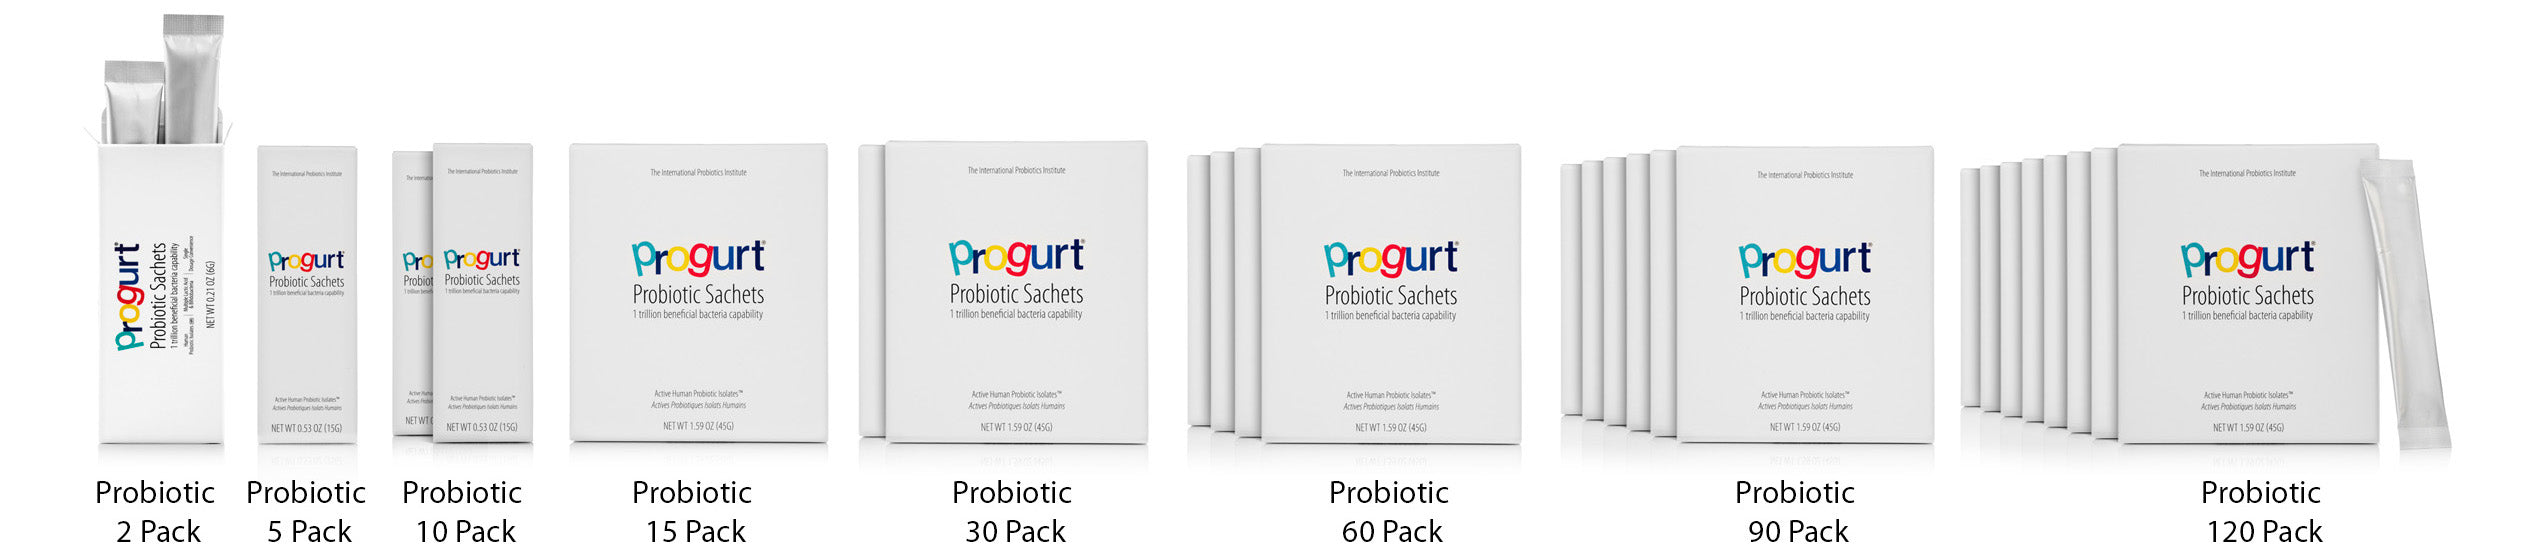 Progurt Probiotic Packs CA